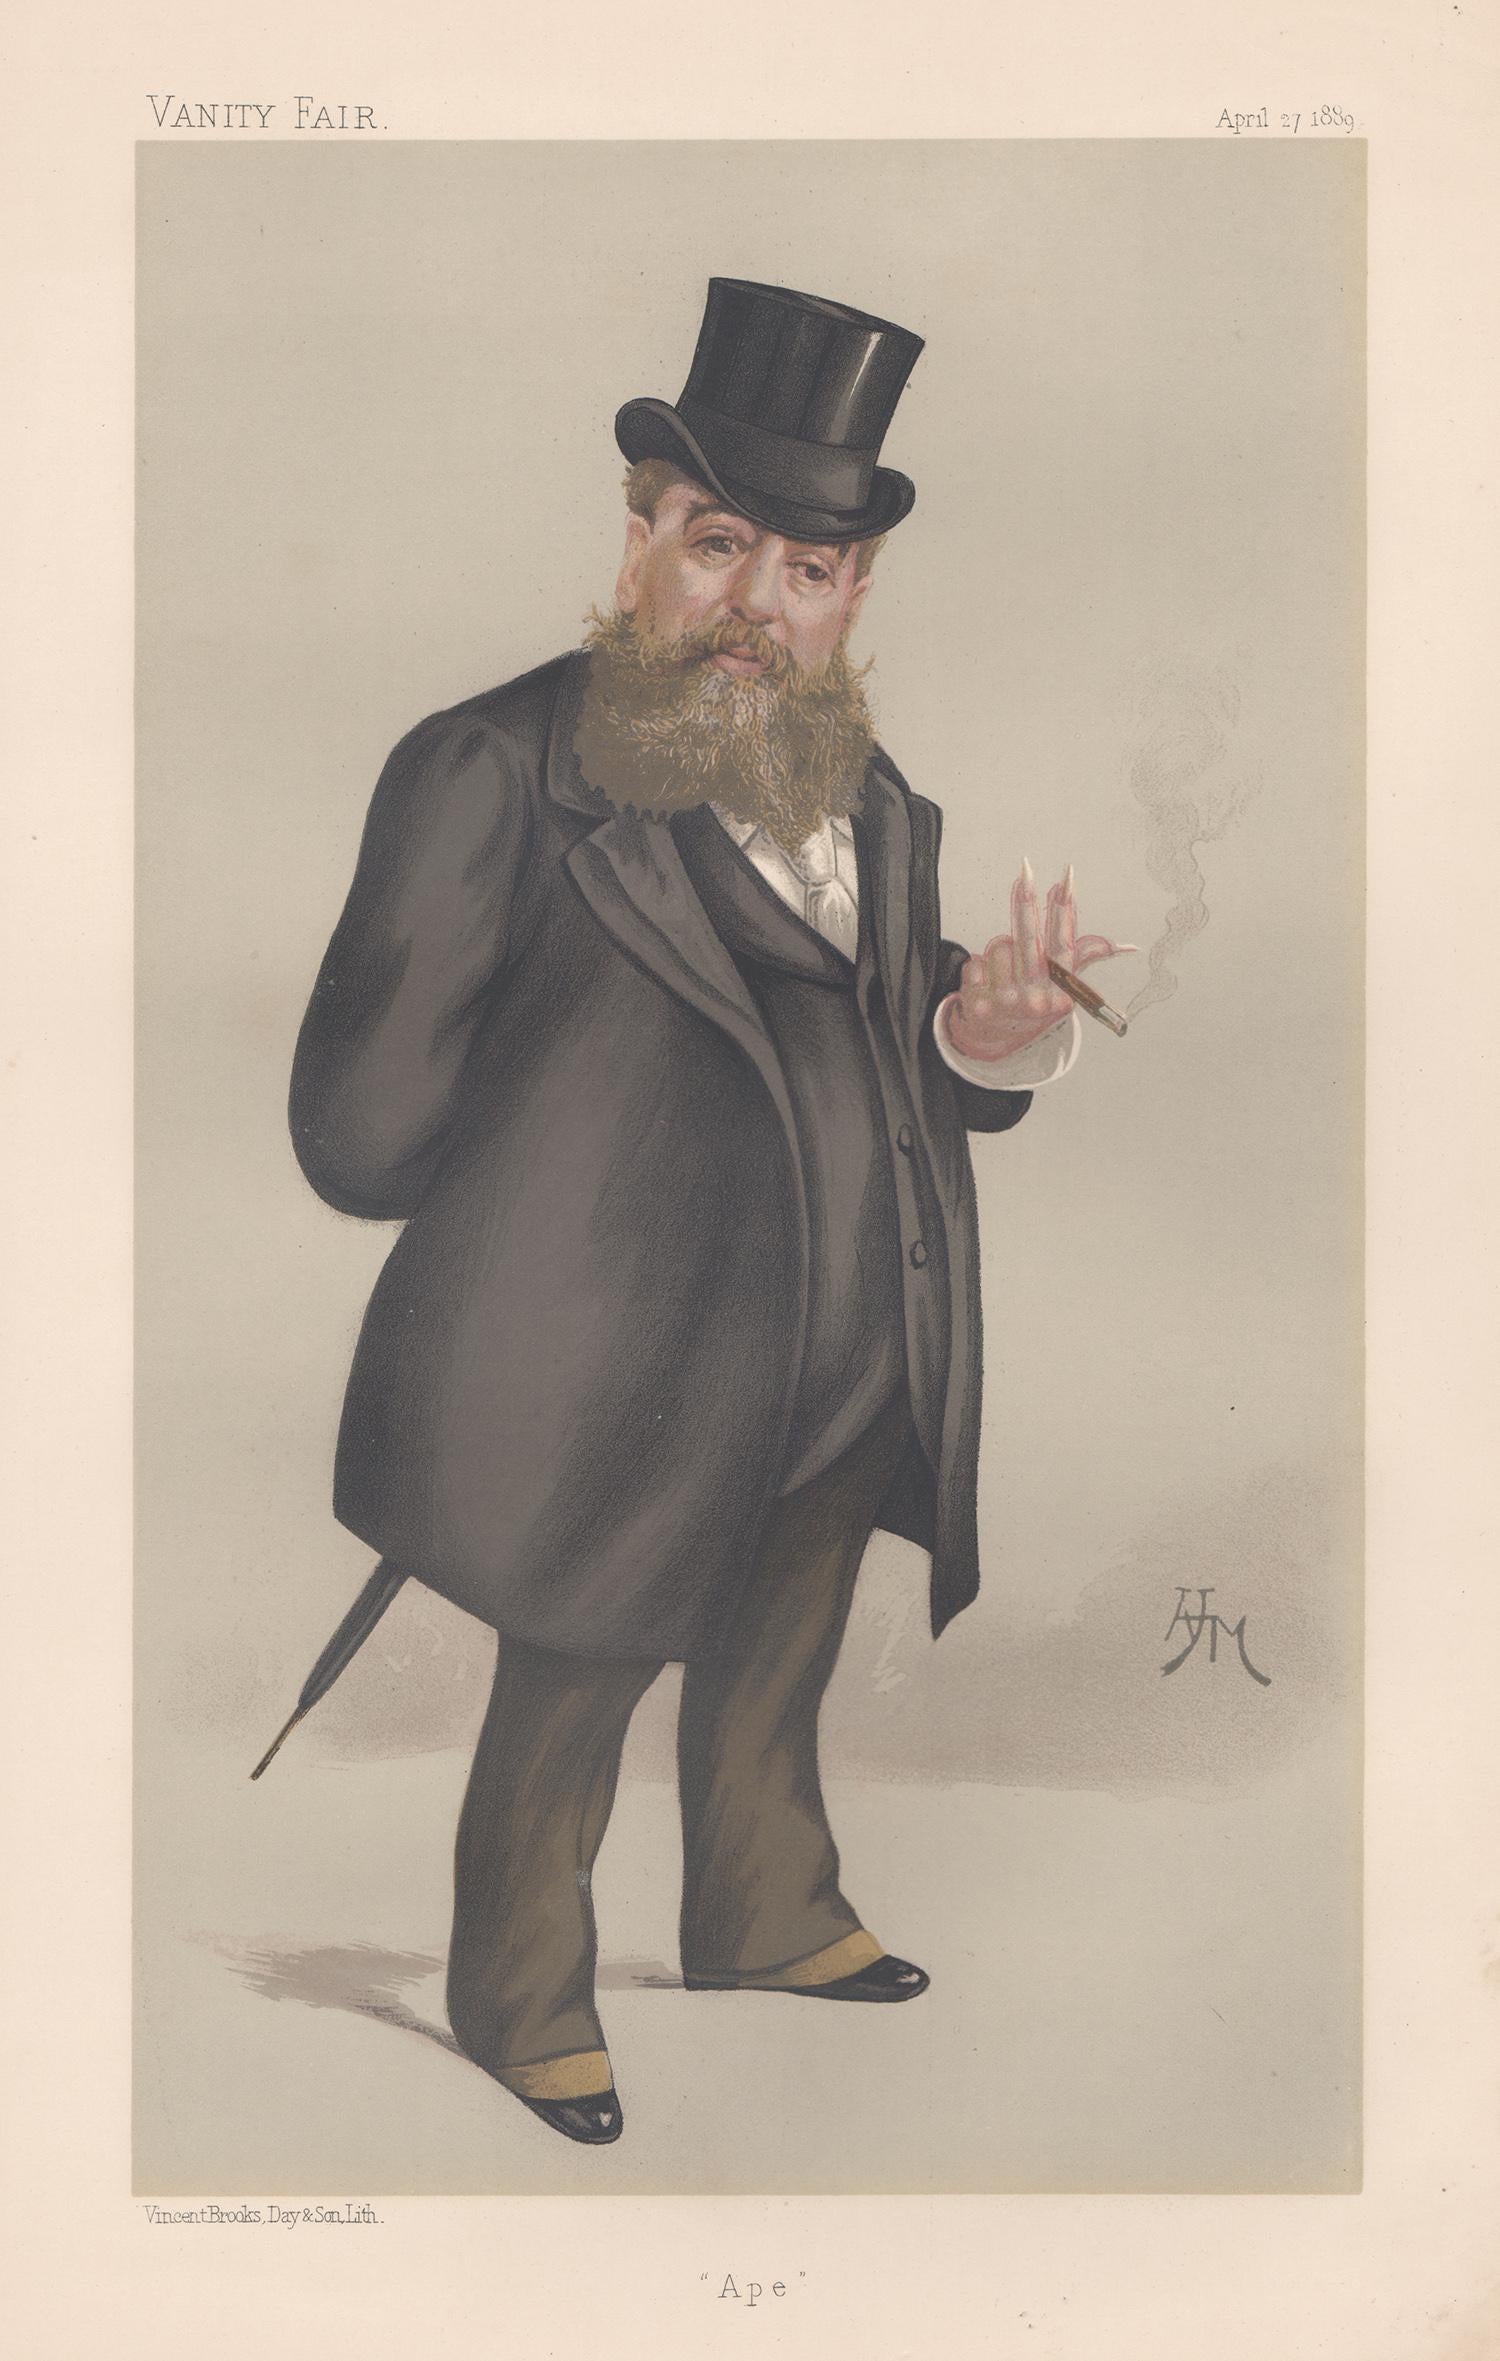 Carlo Pellegrini, Vanity Fair artist portrait chromolithograph 1889